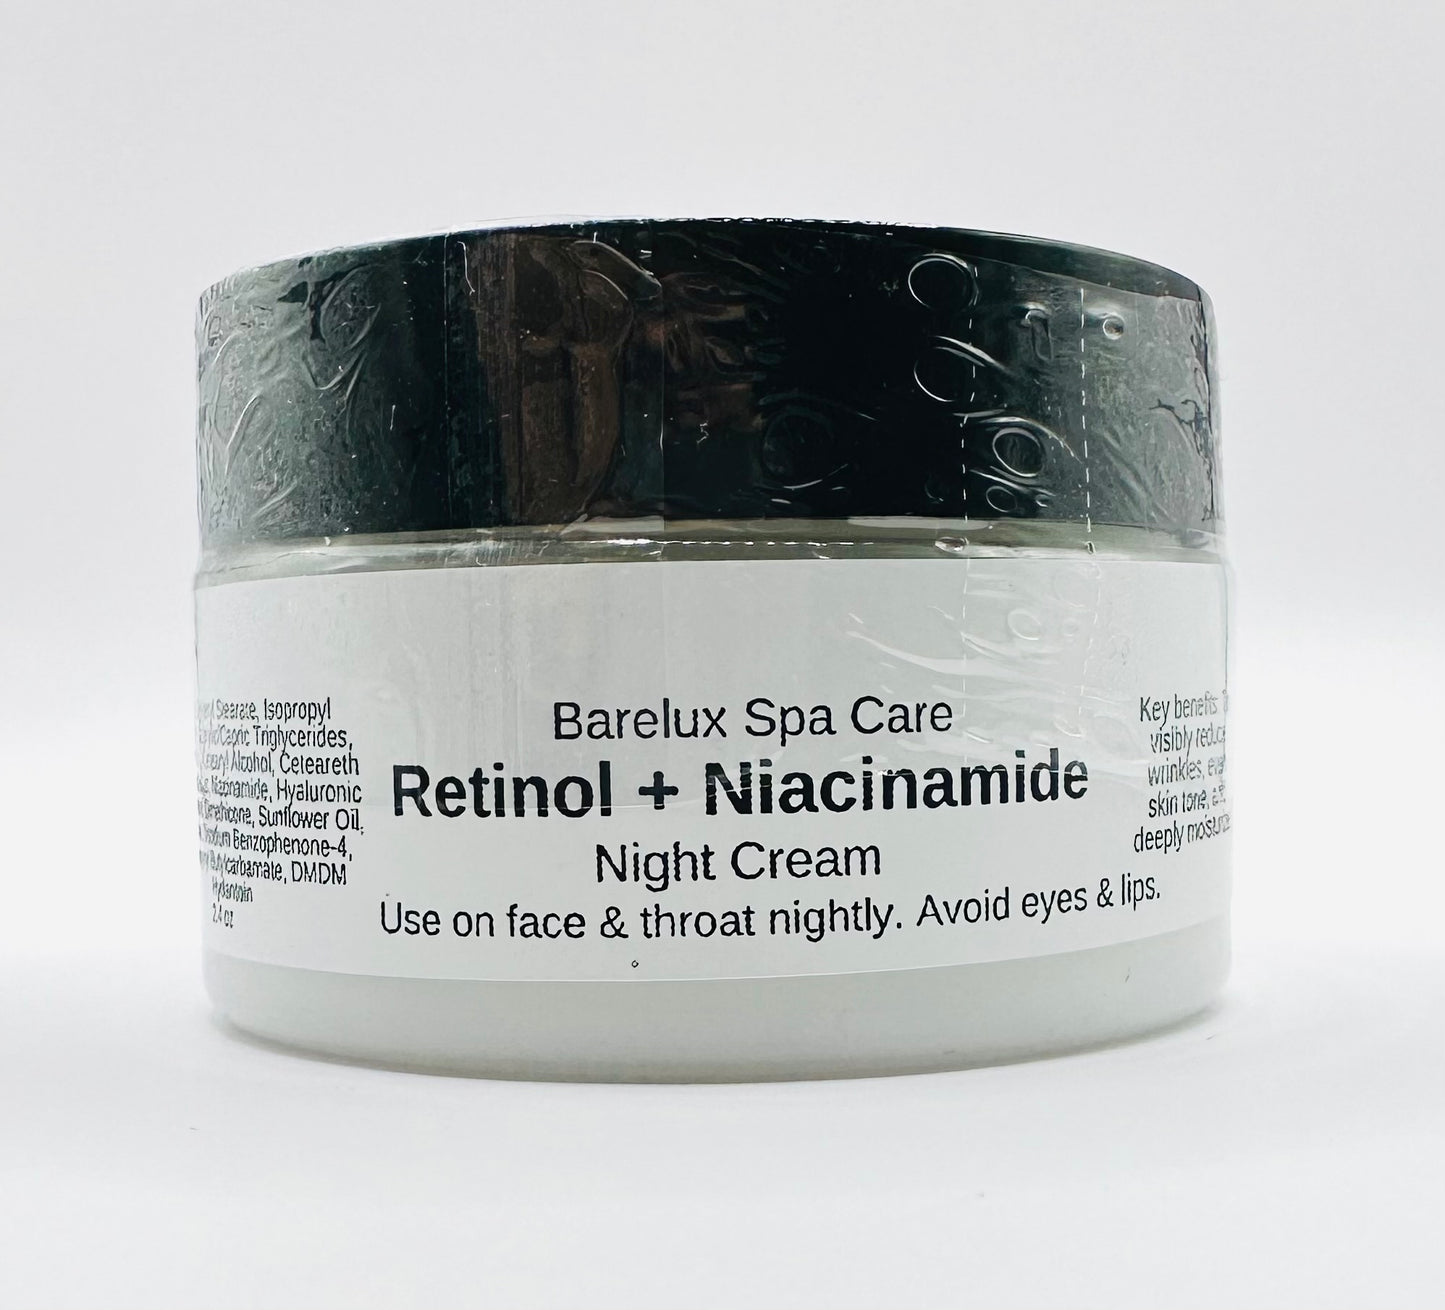 Retinol + Niacinamide Night Cream